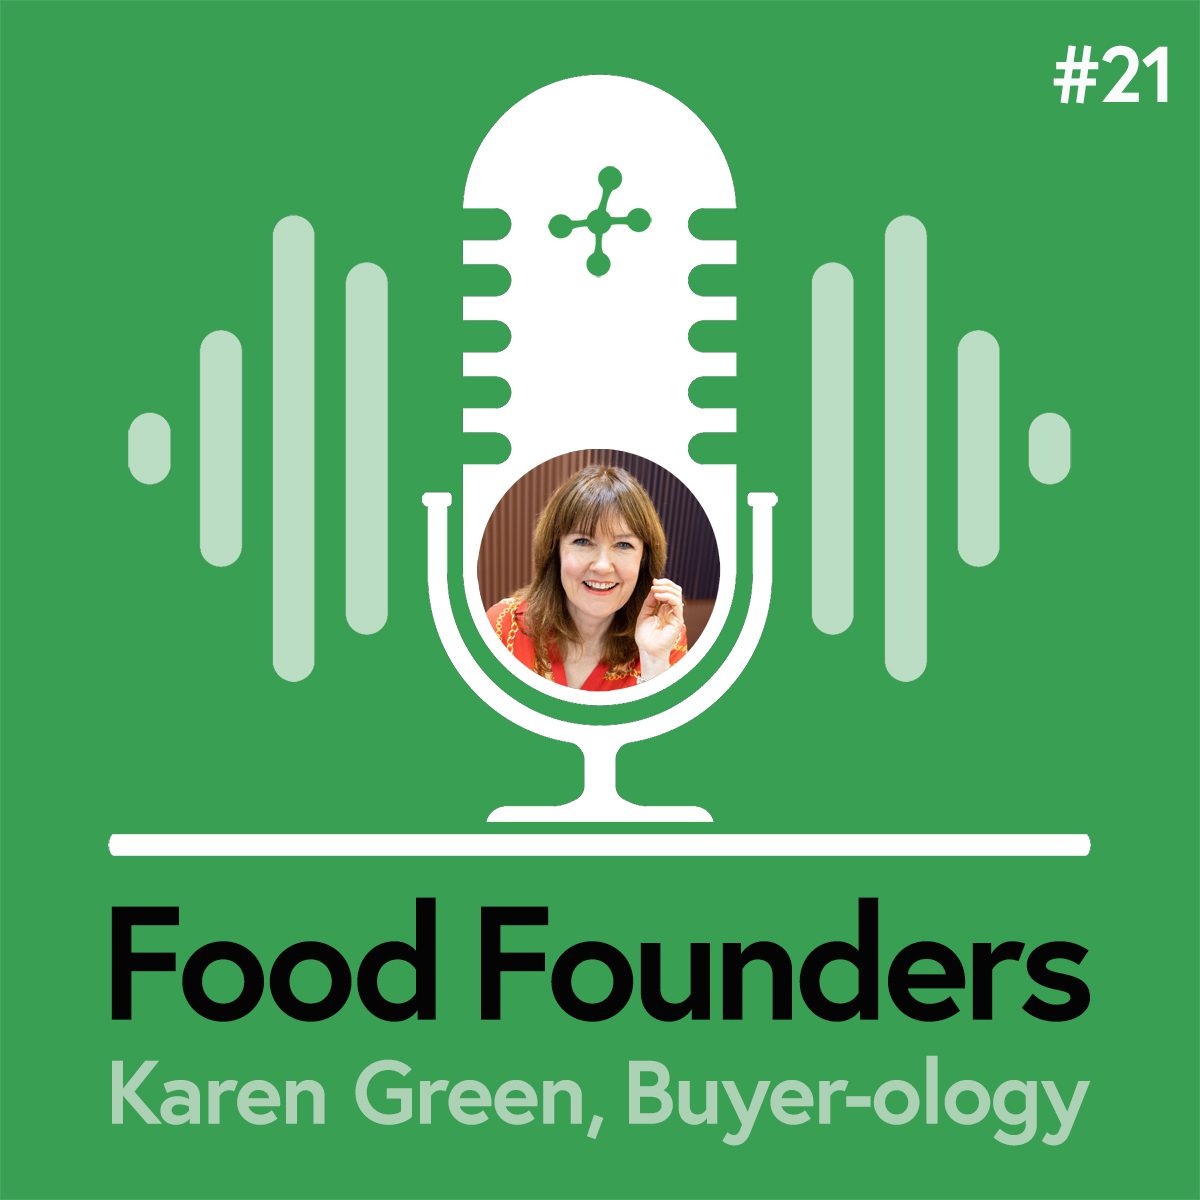 Food Founders Interview podcast - Karen Green & Buyer-ology